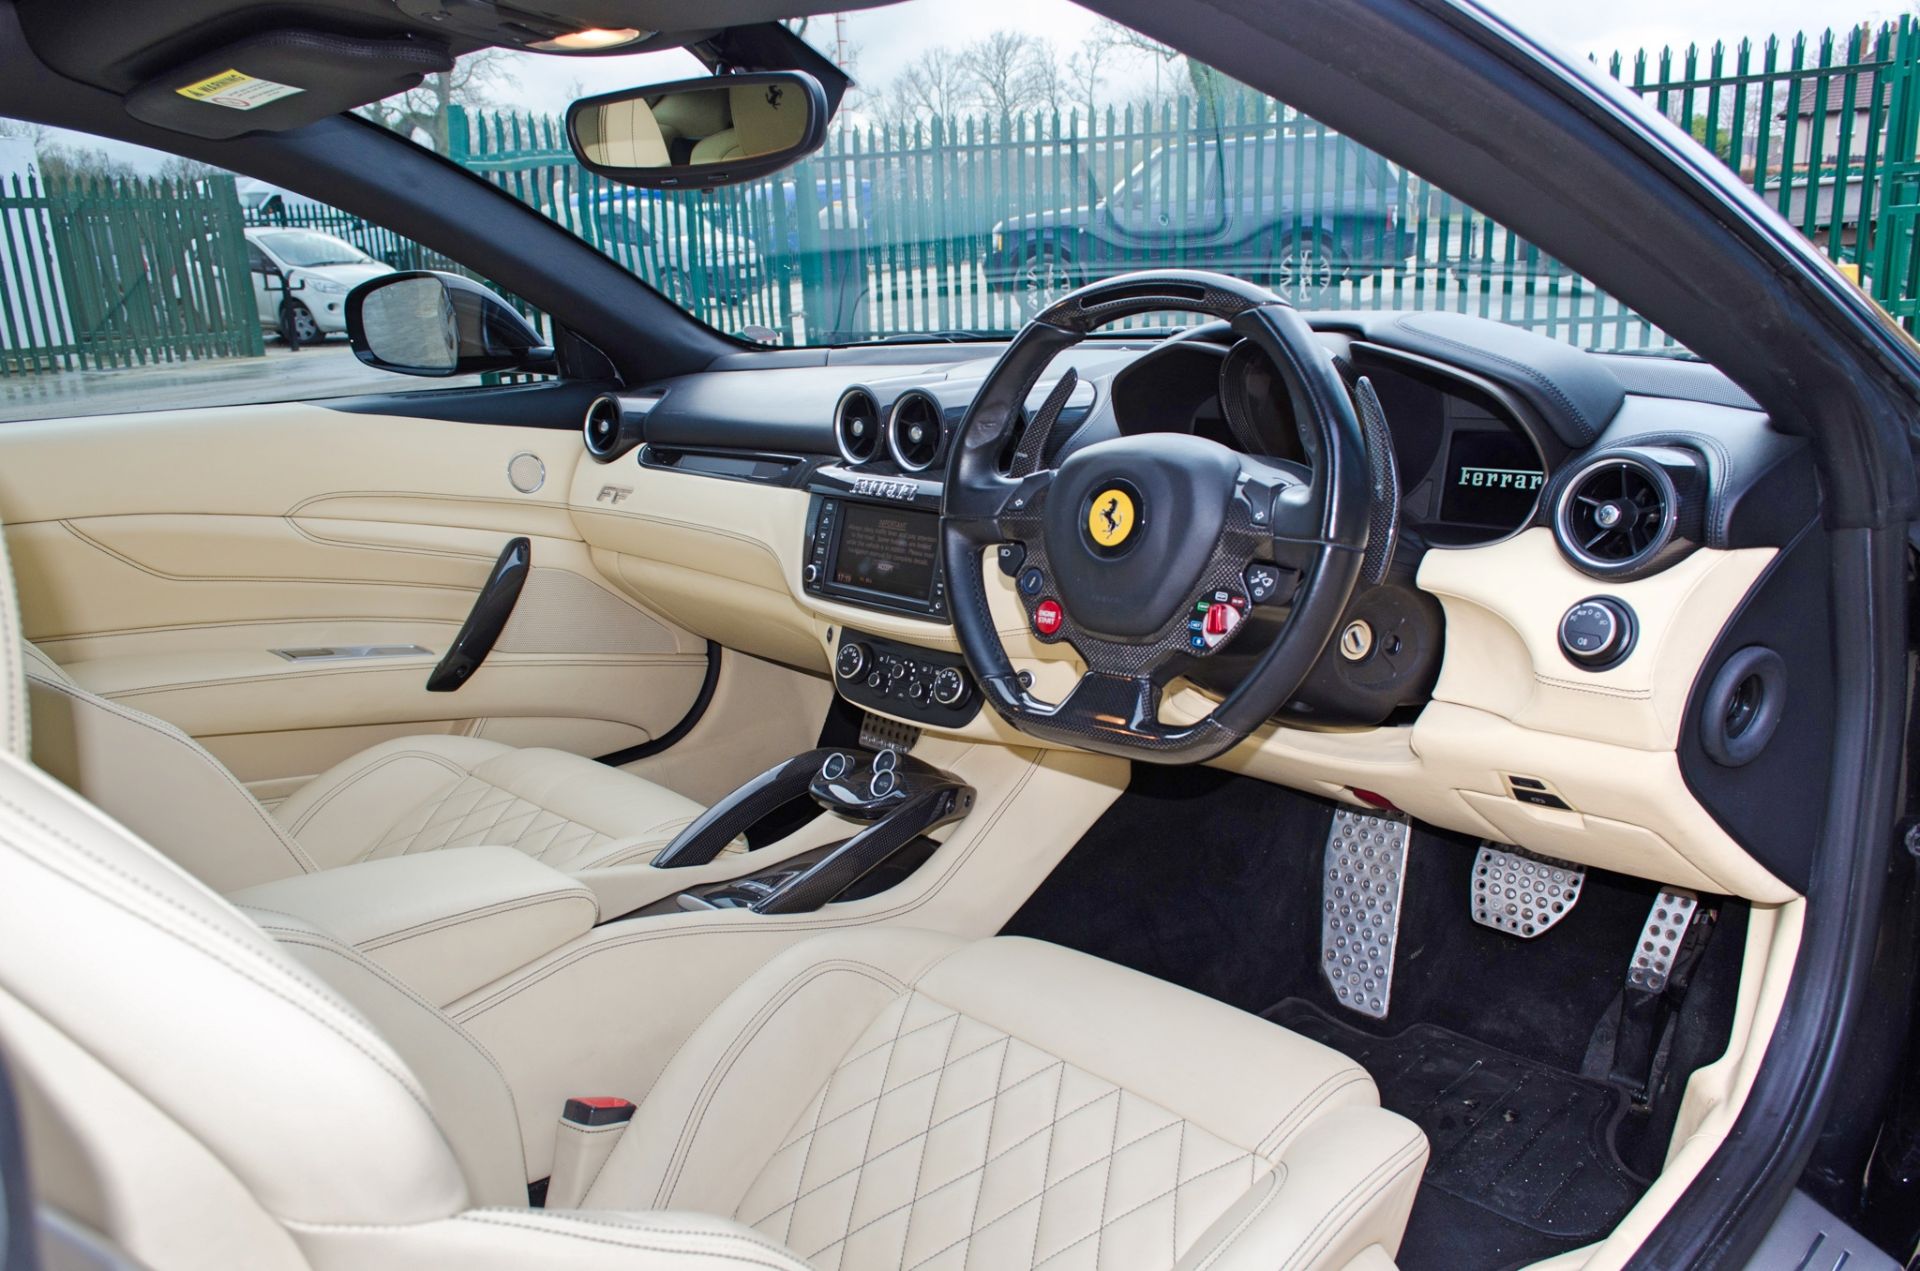 2014 Ferrari FF 6262cc V12 3 door coupe - Image 33 of 74